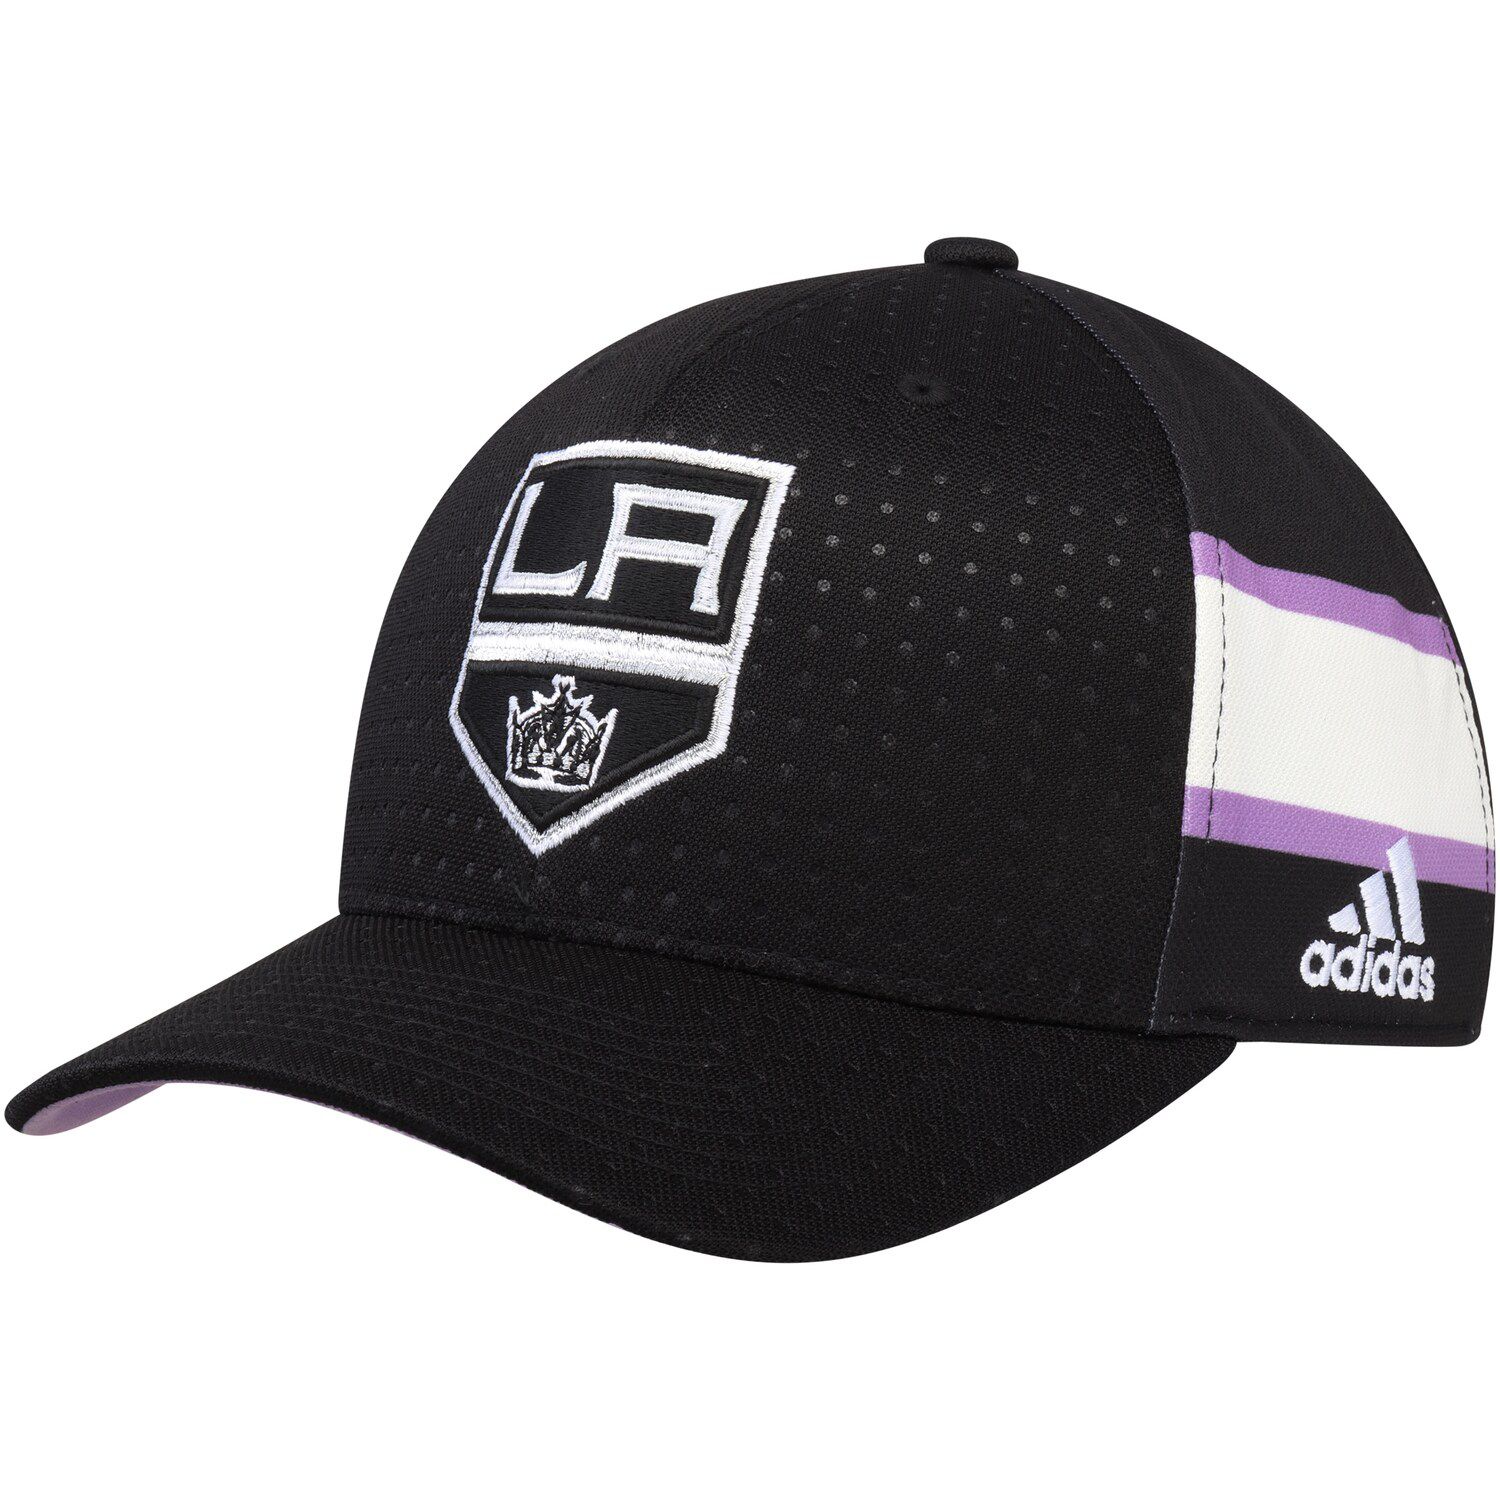 nhl hockey fights cancer hats